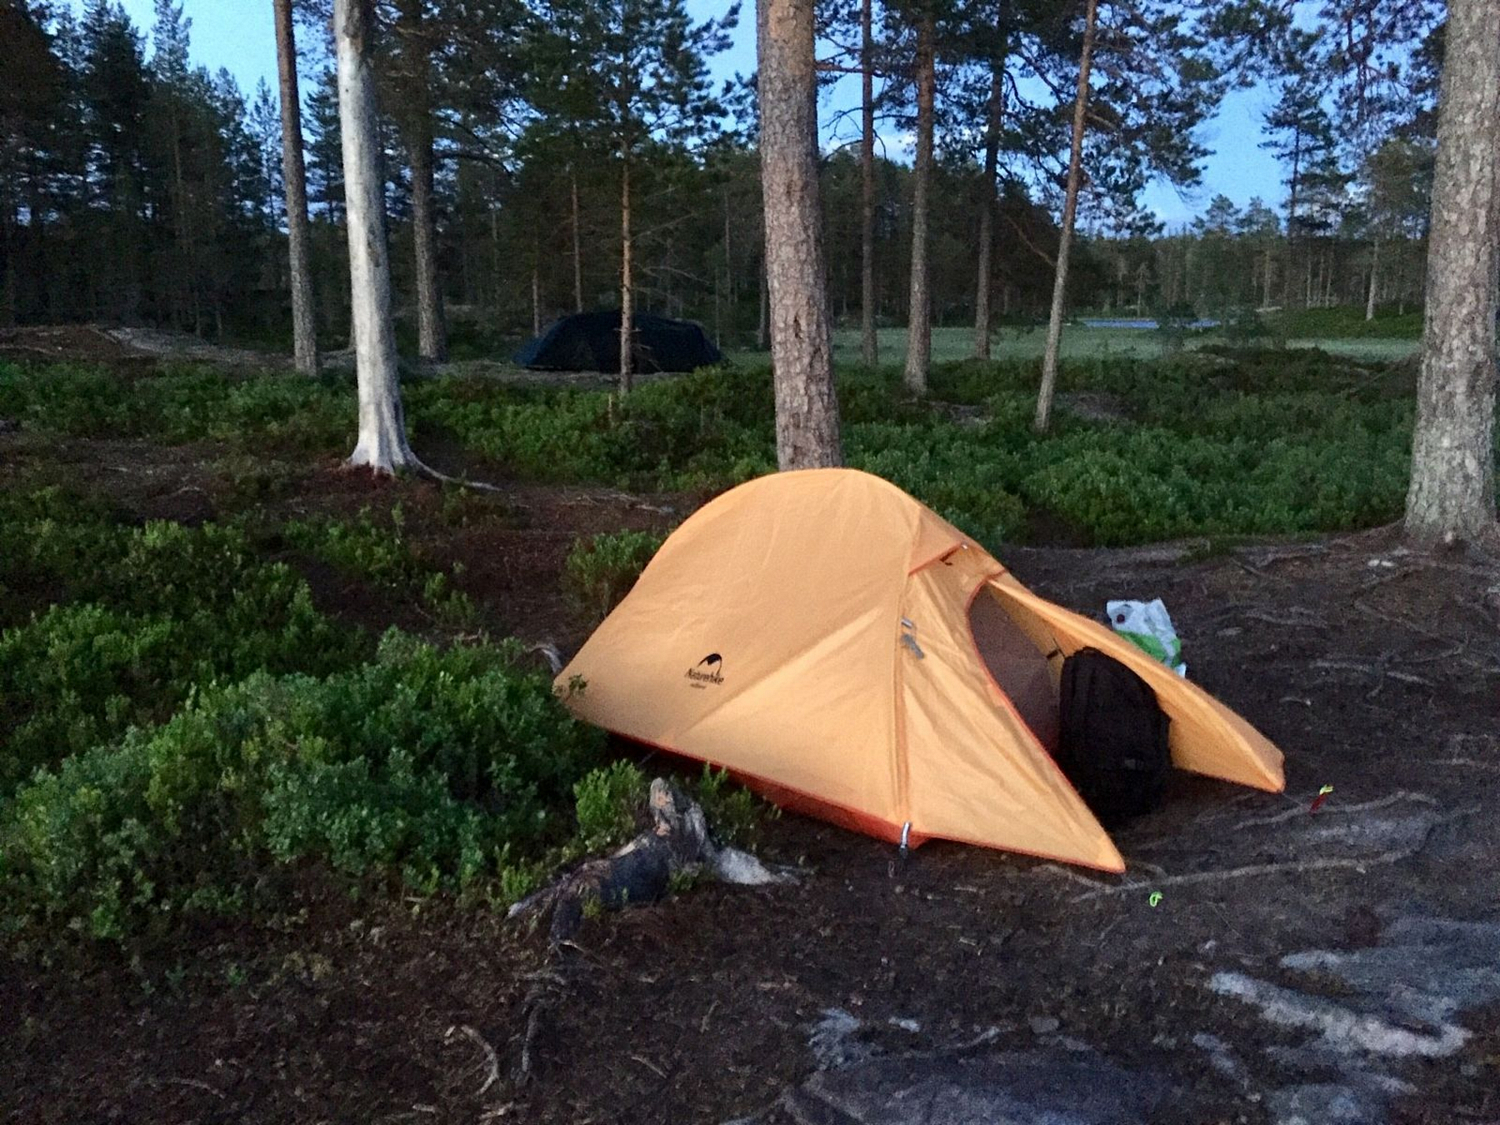 Палатка Naturehike Ultralight Three-Man Cloud Up 3 Tent New Version 210T + Mats Orange